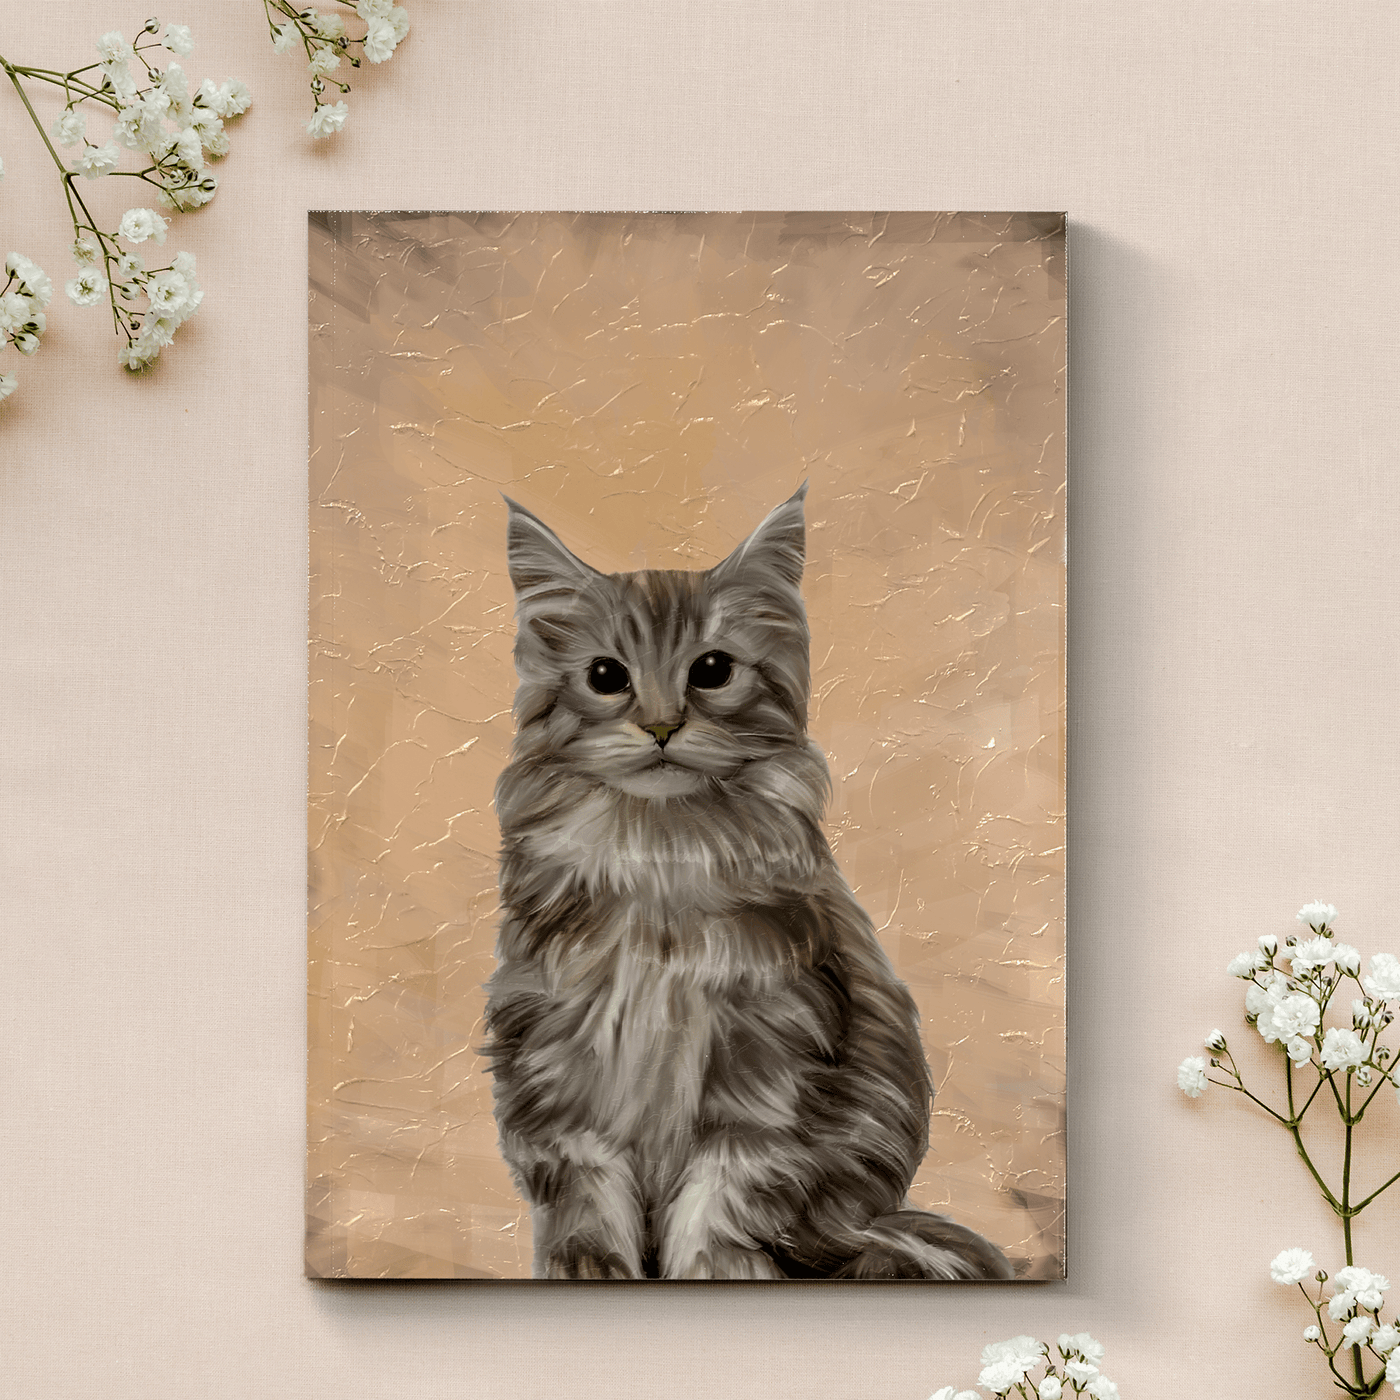 acrylic cat painting of an adorable fur cat